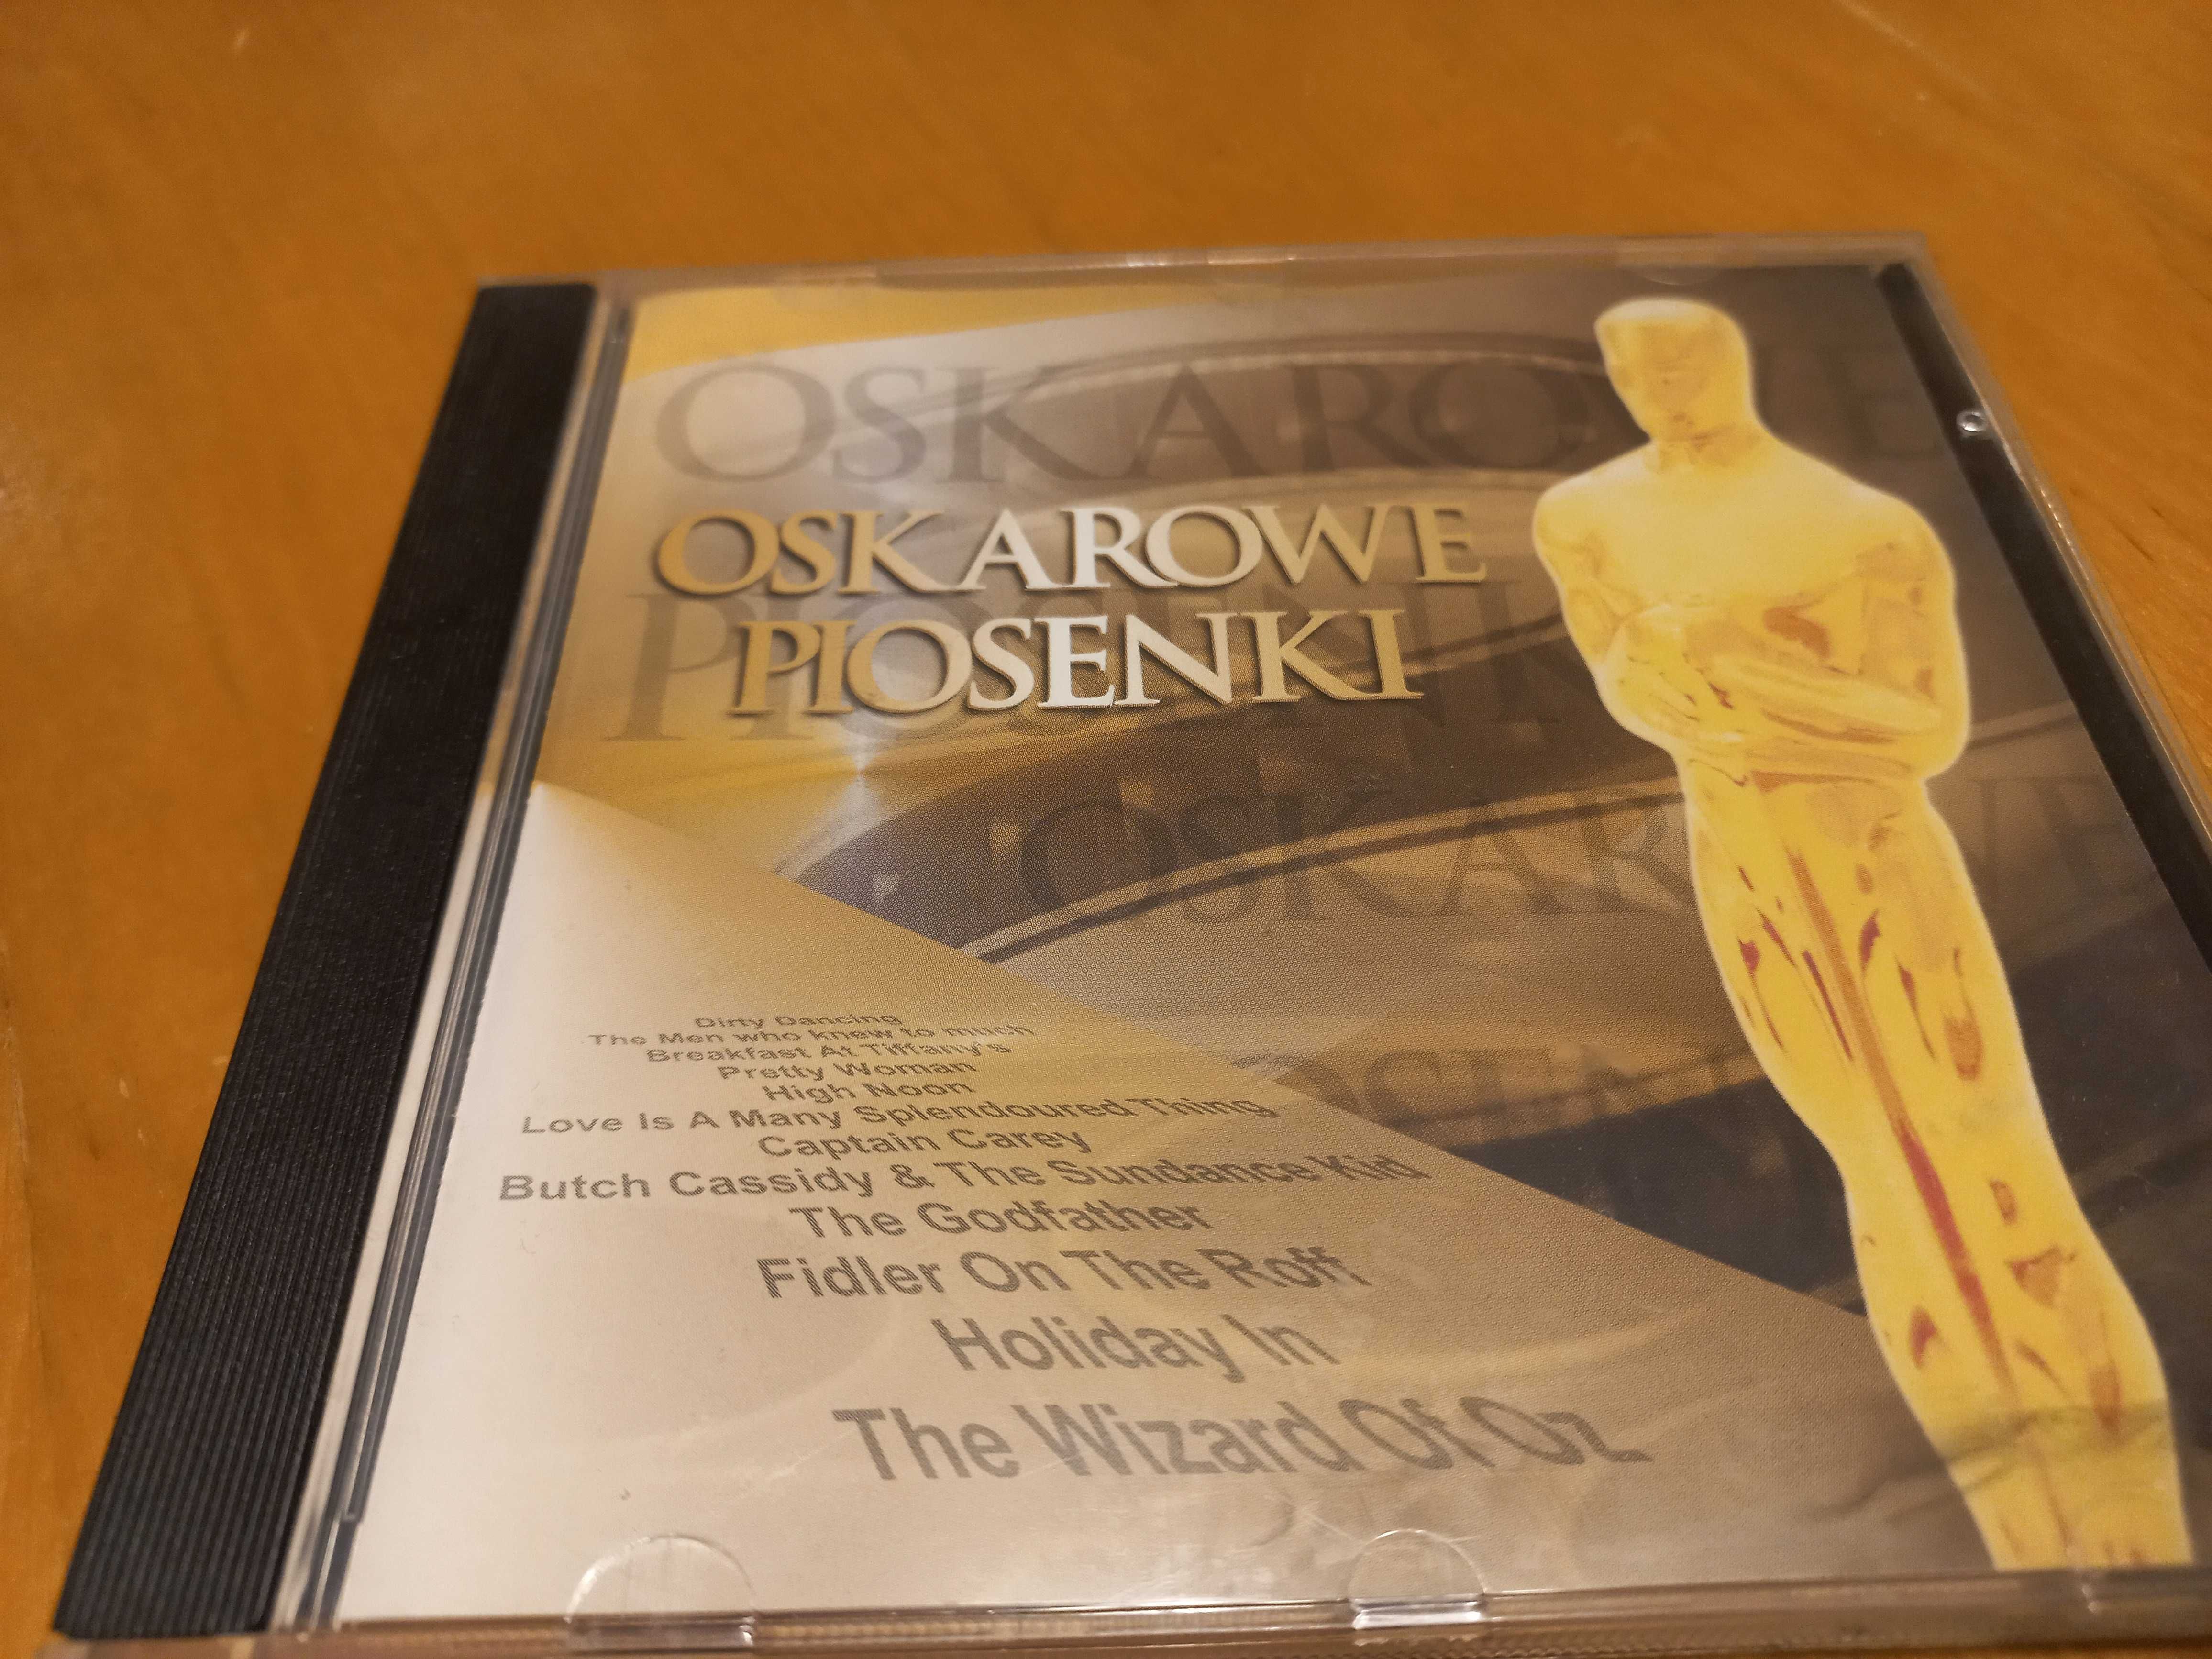 !!! druga płyta CD za 5 zł !!! - piosenki nagrodzone Oskarem